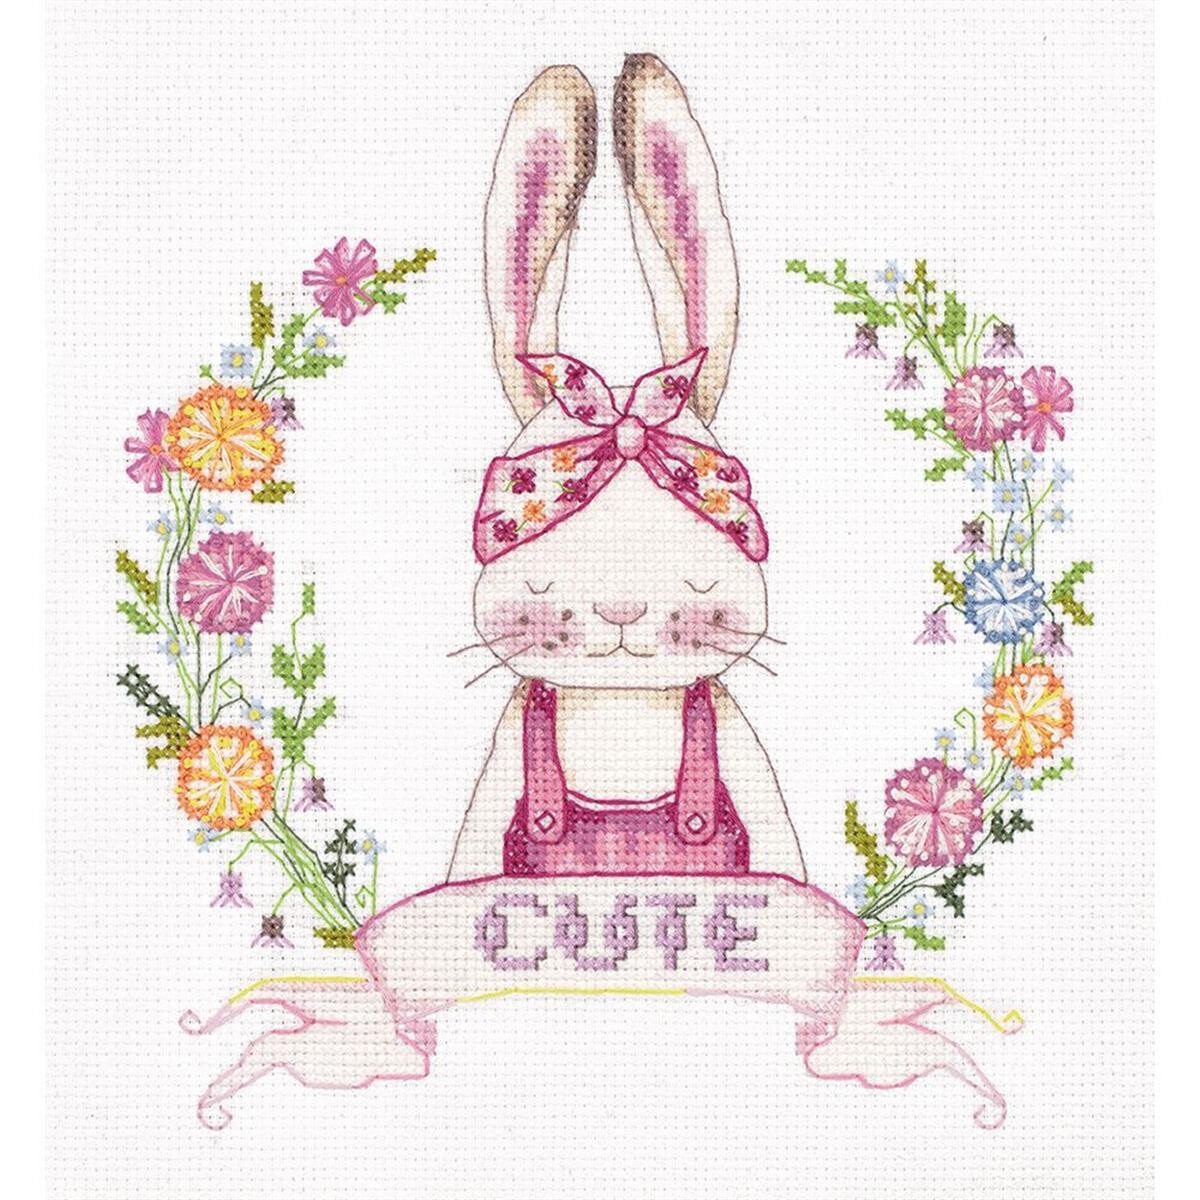 Panna counted cross stitch kit  "Cute Bunny",...